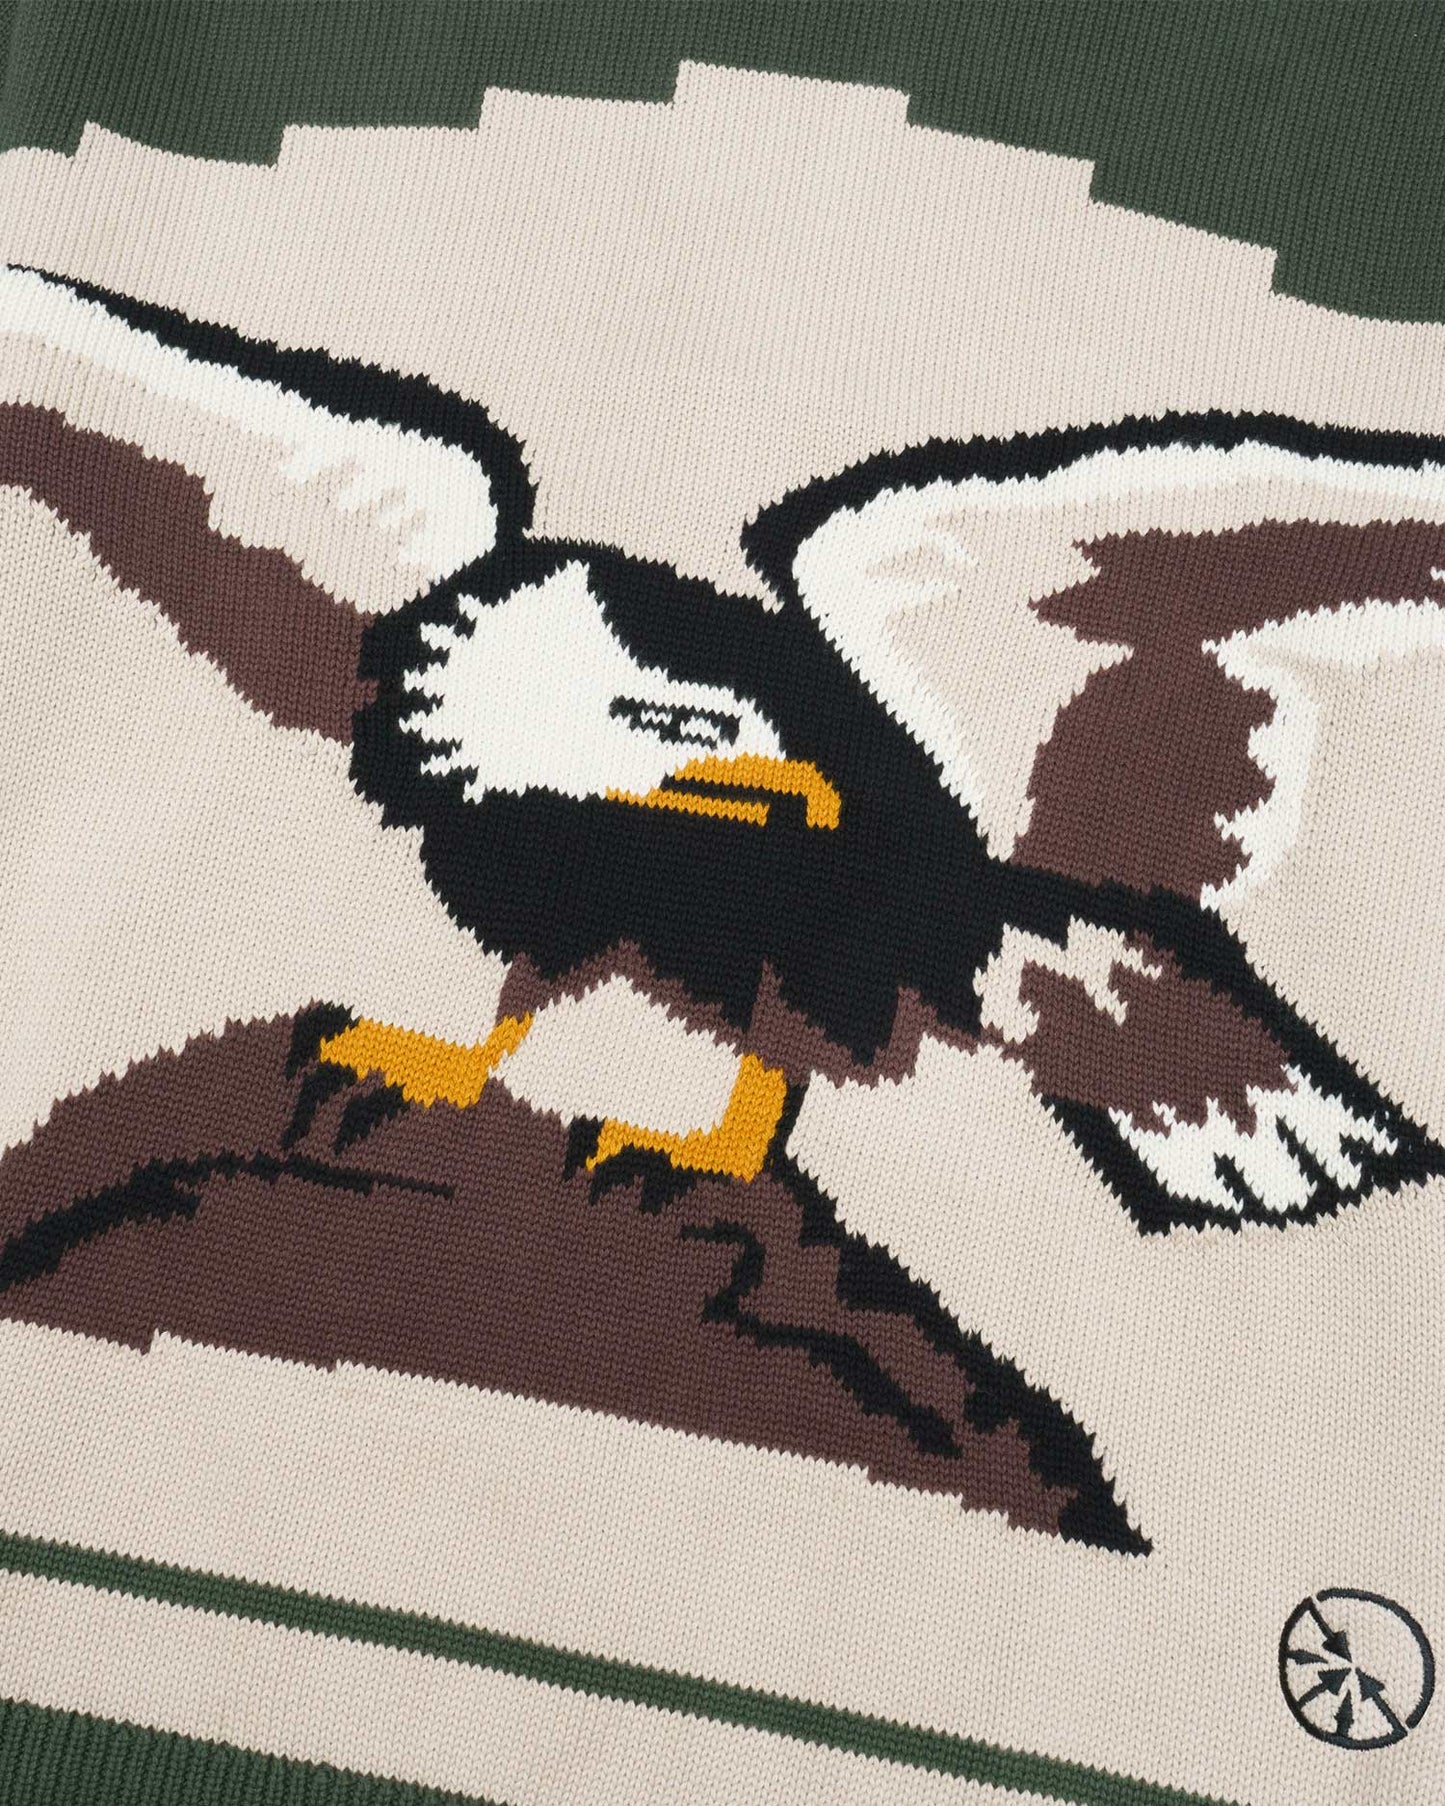 "Eagle" Intarsia Knitted Pima Cotton Beige Sweater - mrcnoir